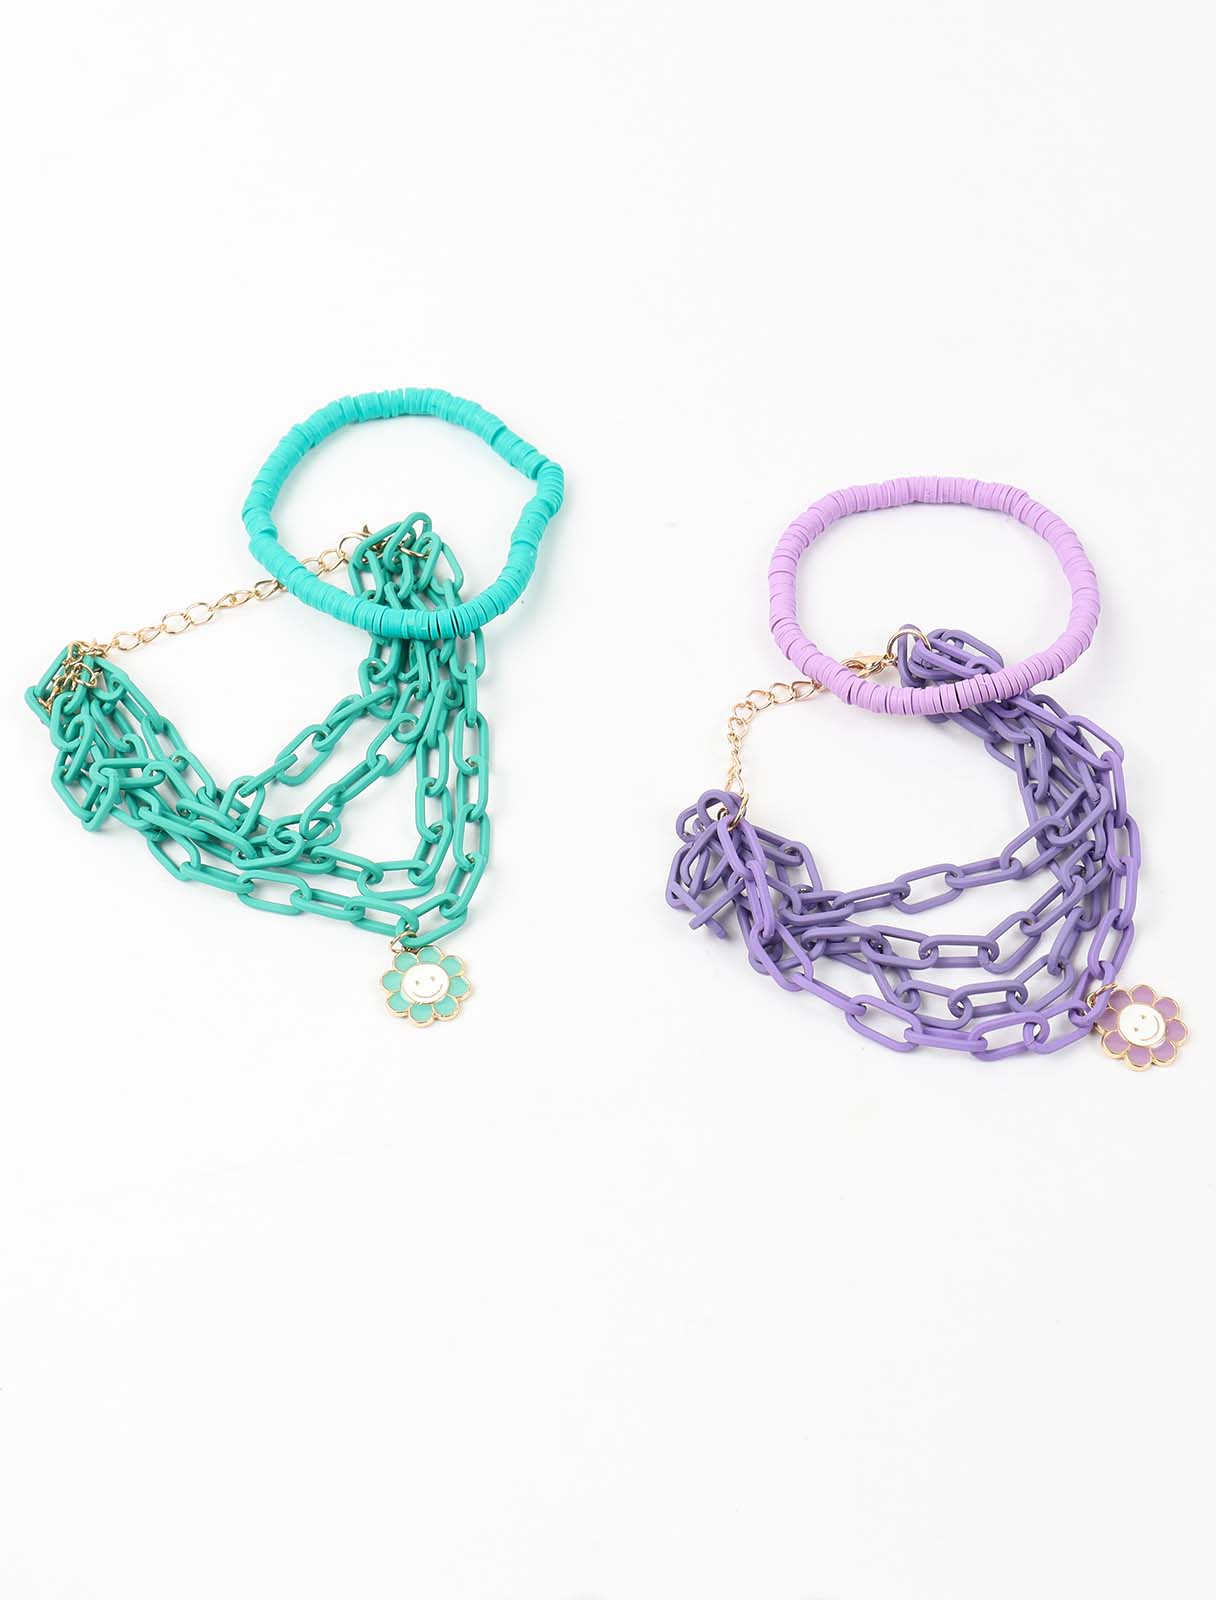 2 pieces bracelet in modern colors